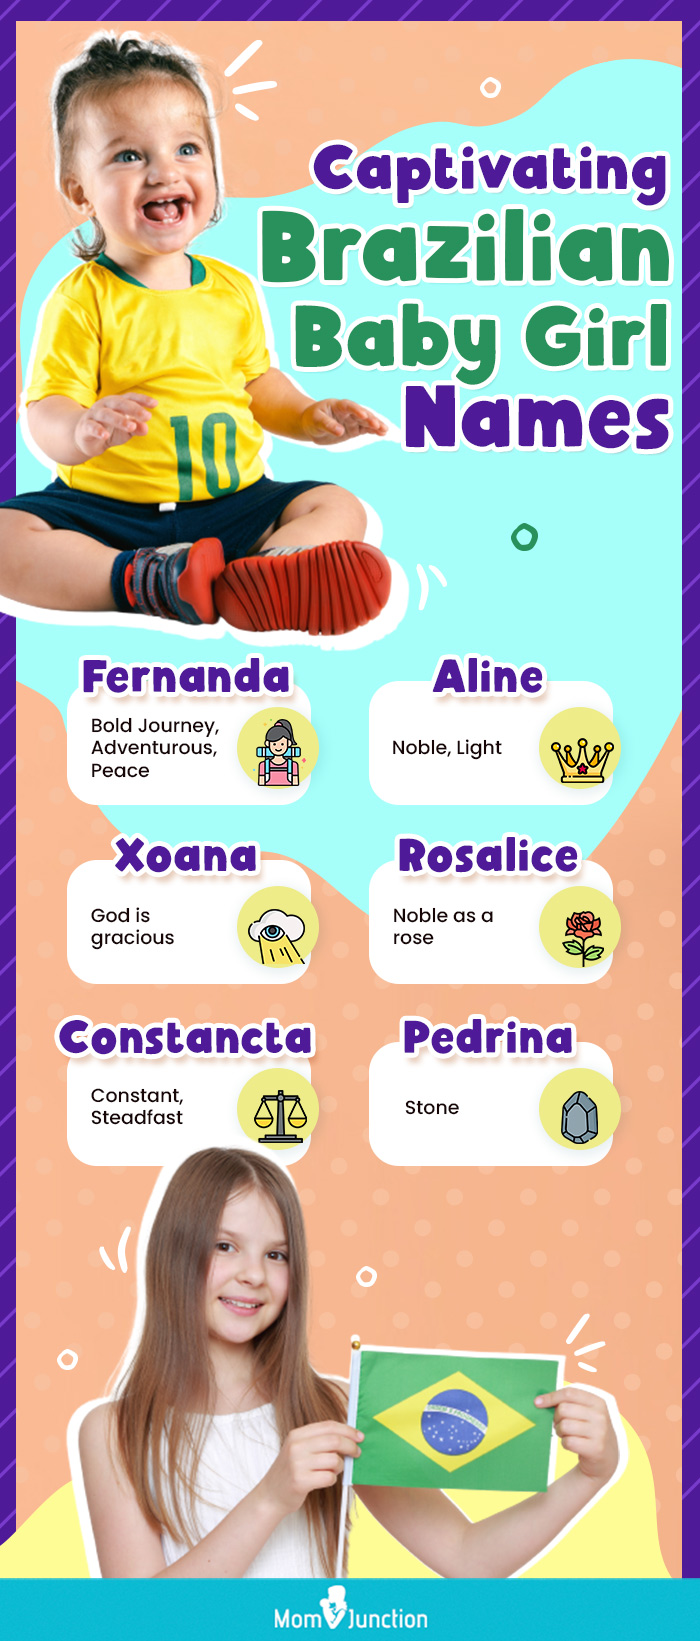 captivating brazilian baby girl names (infographic)